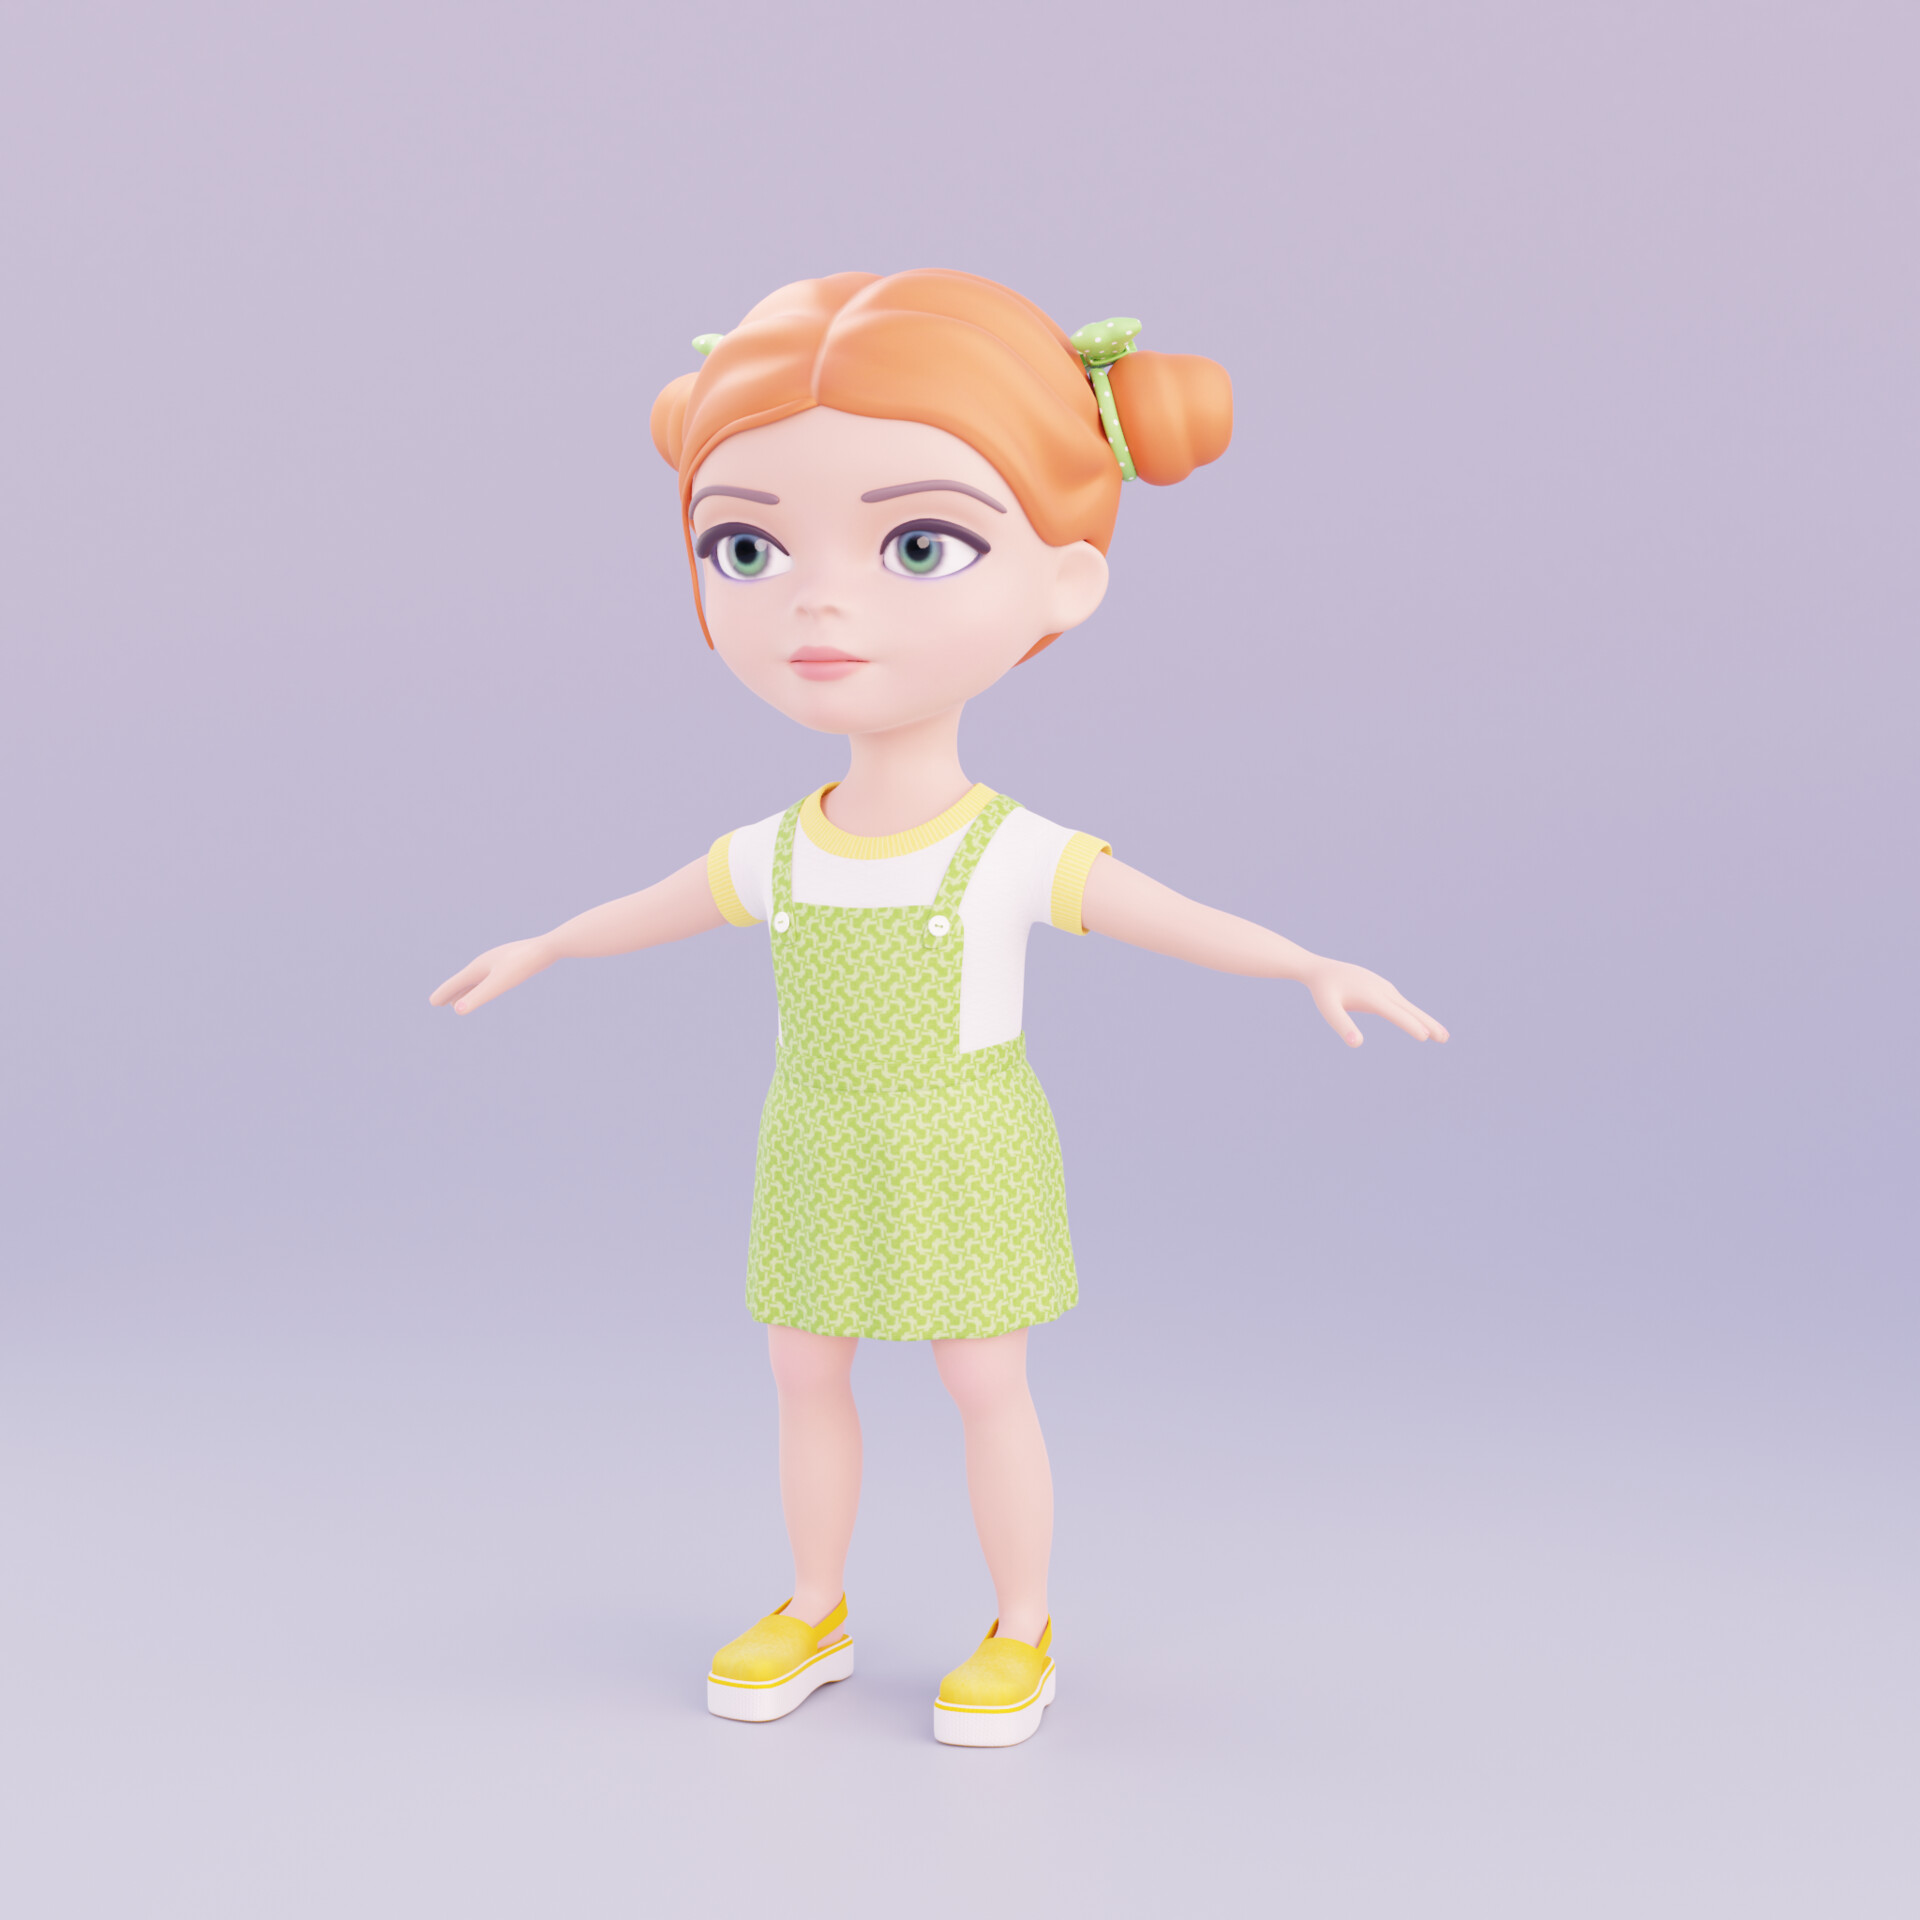 ArtStation - 3d character cartoon baby girl